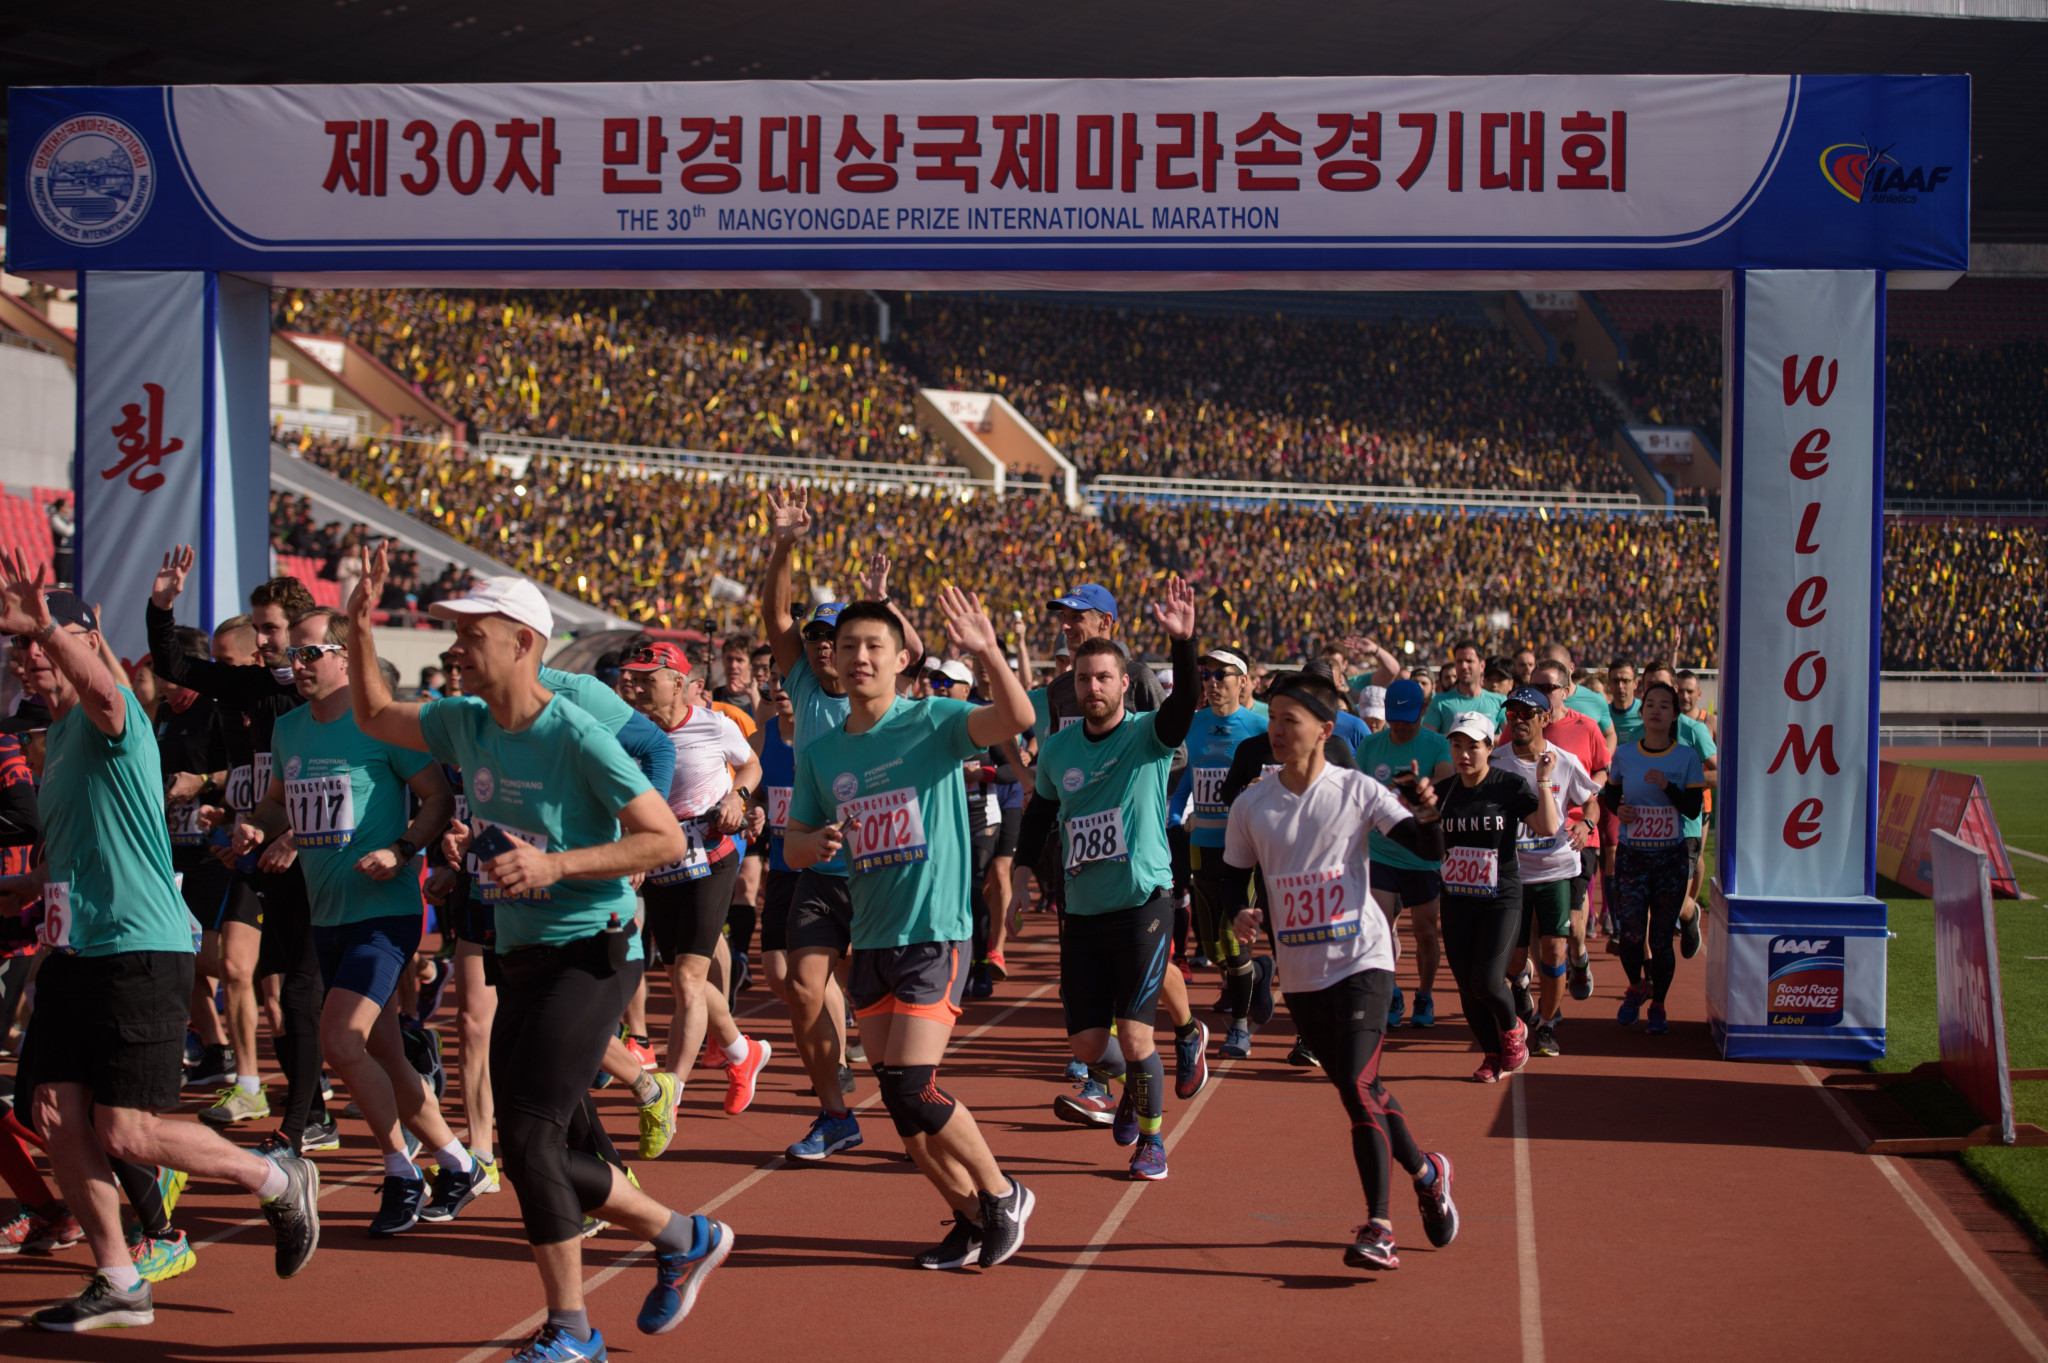 Pyongyang Marathon latest sporting event cancelled due to coronavirus outbreak